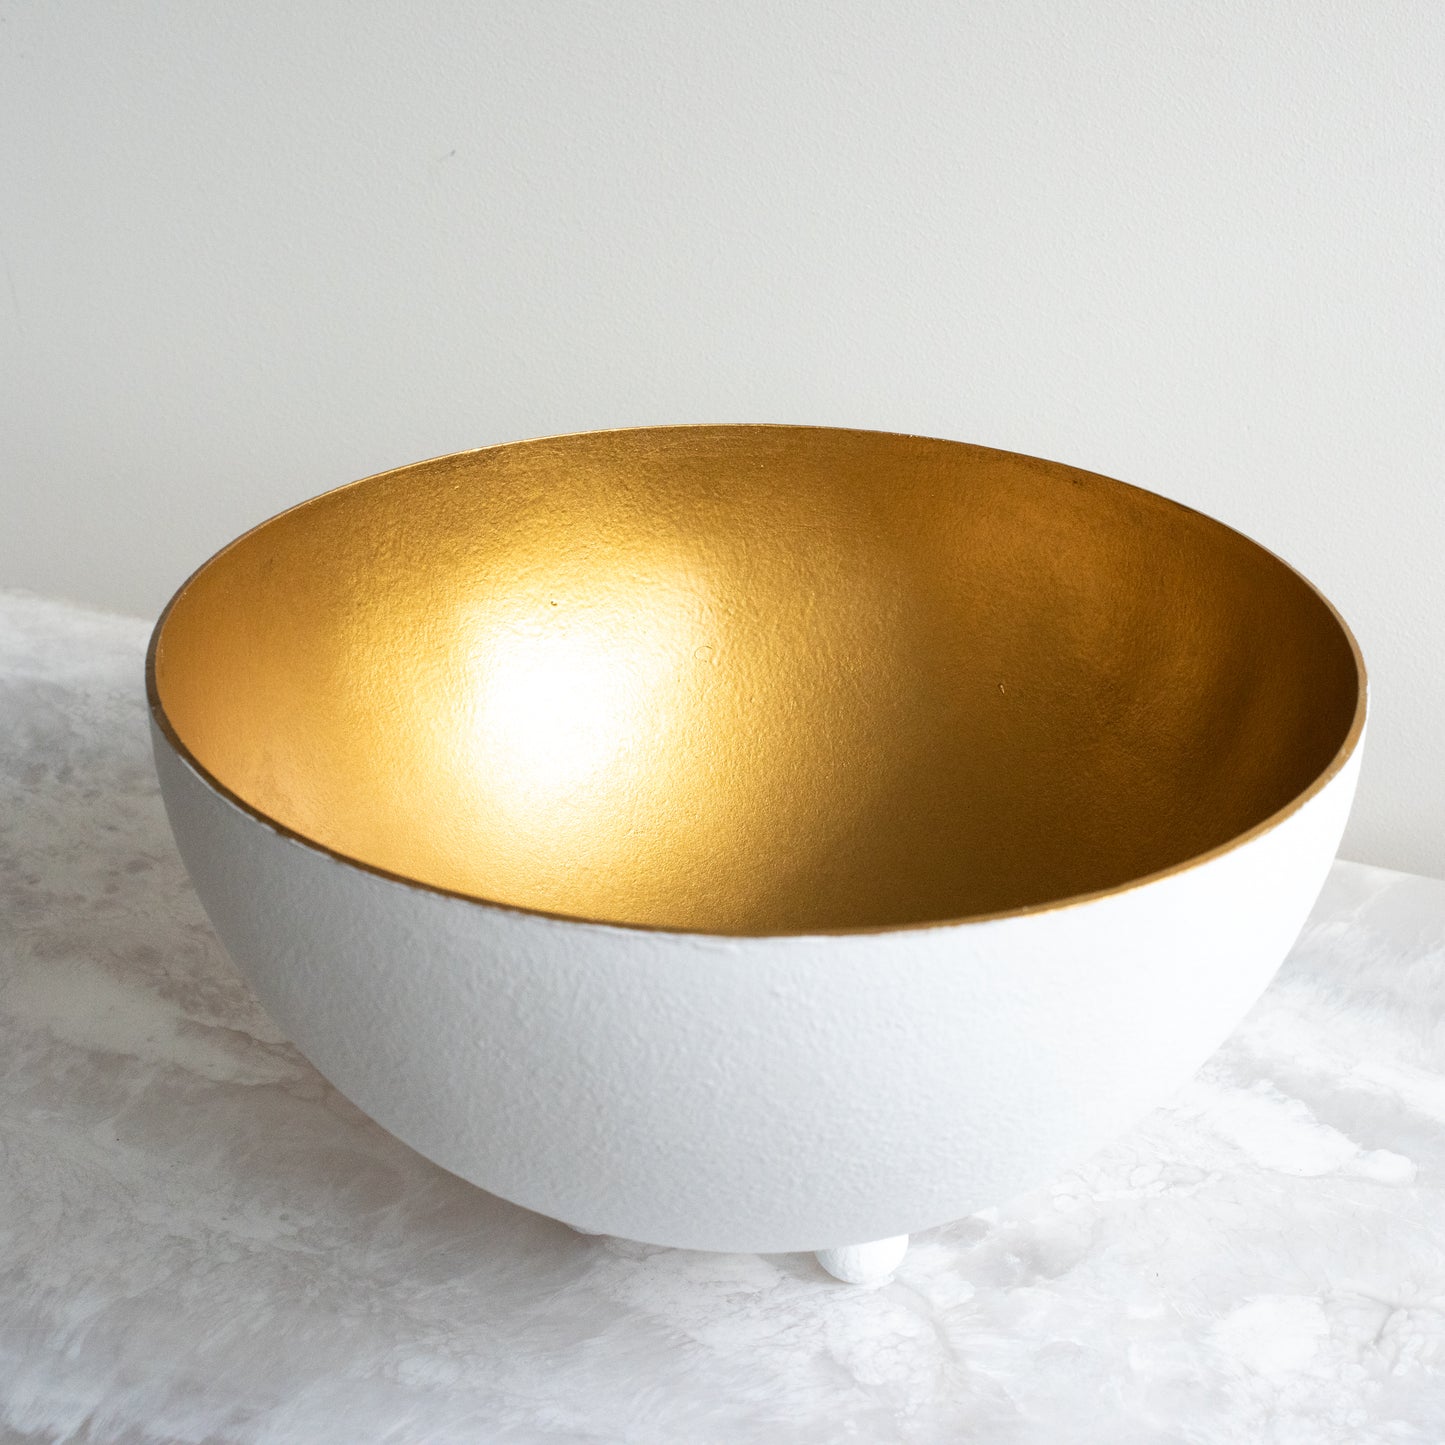 Hamish Bowl with Gold Interior- 12"